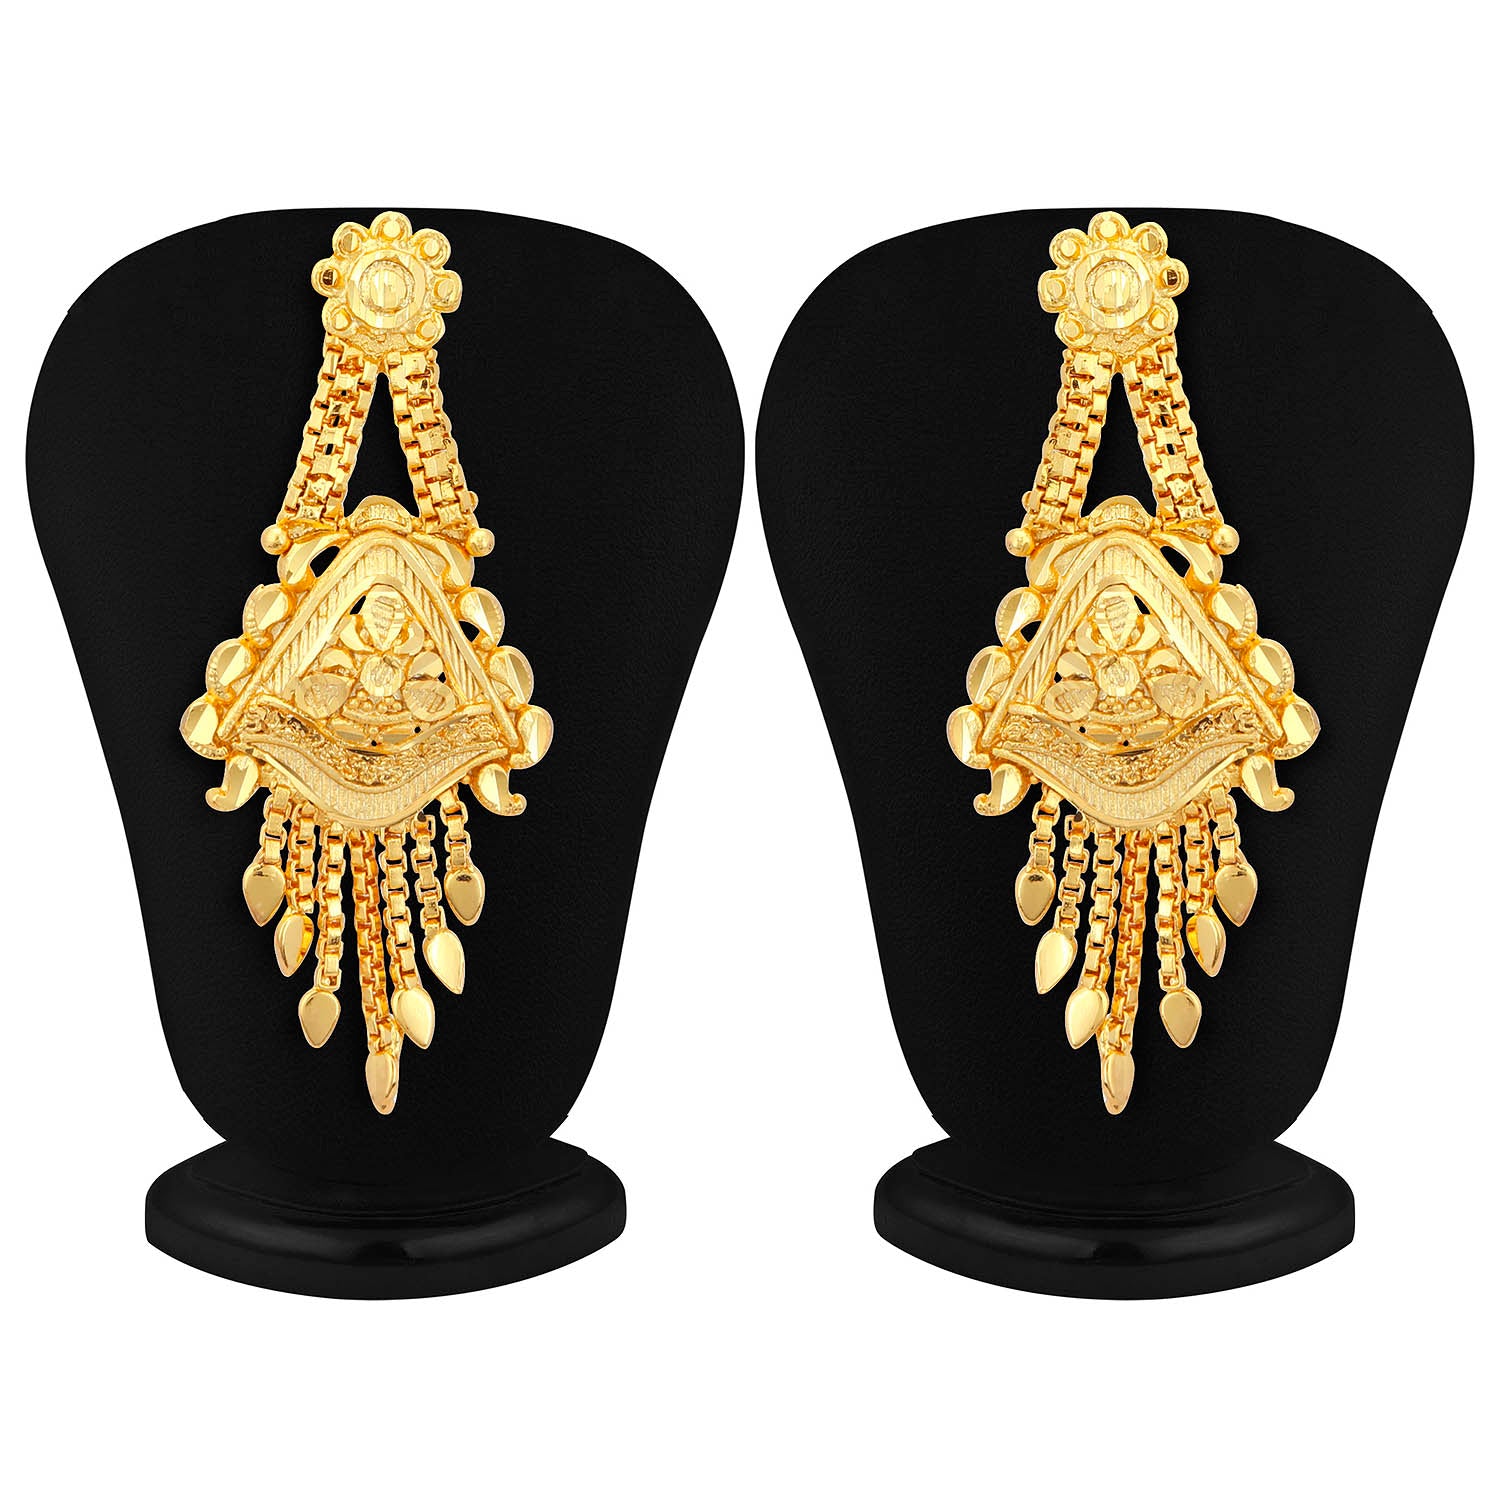 Flower Love 1 Gram Gold Earring in Nashik at best price by S K Gold -  Justdial